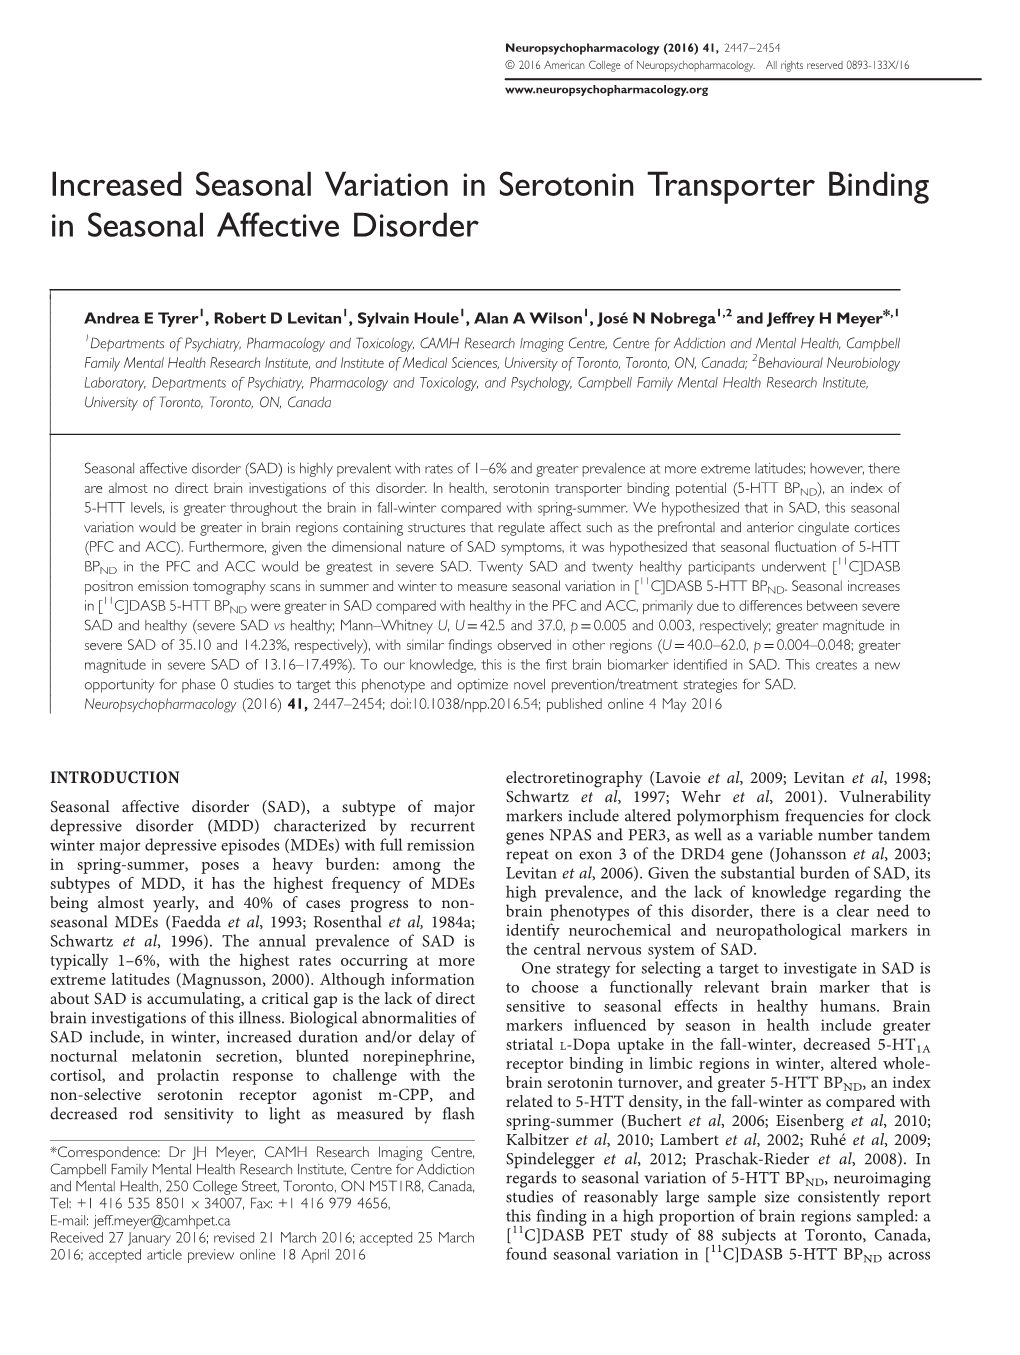 Increased Seasonal Variation in Serotonin Transporter Binding in Seasonal Affective Disorder